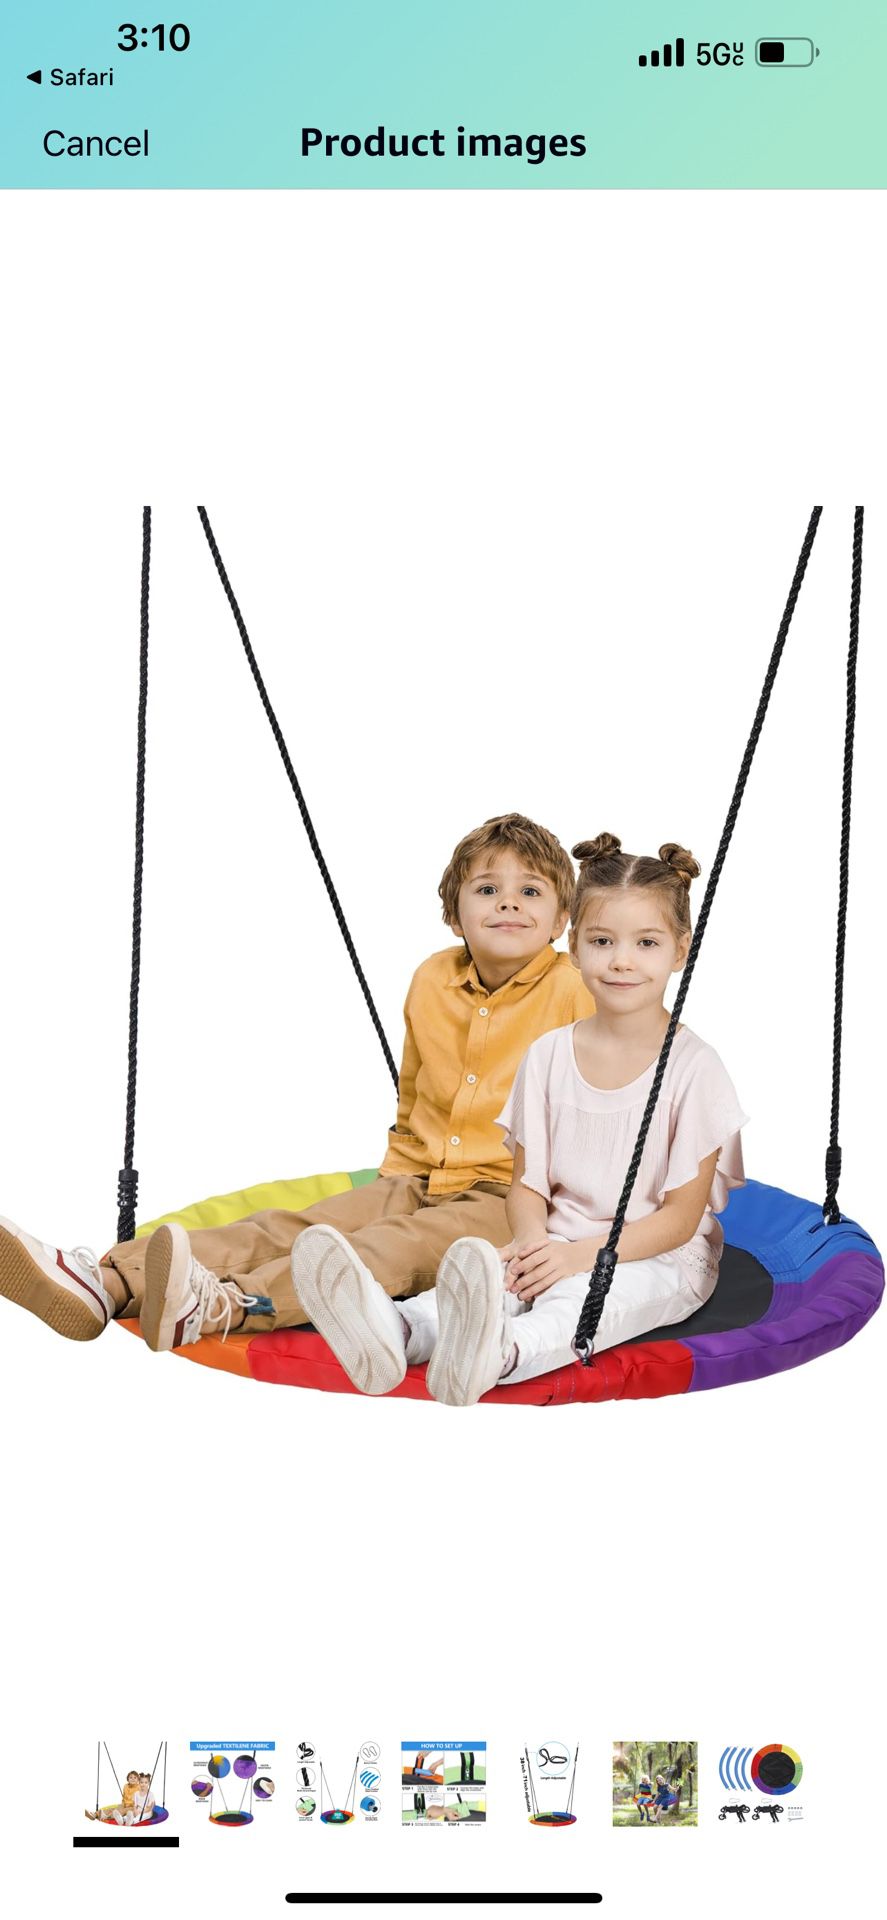 40'' Saucer Swing Web Swing, Round Tree Swing for Kids Indoor Outdoor Swing Set 800lb Capacity 